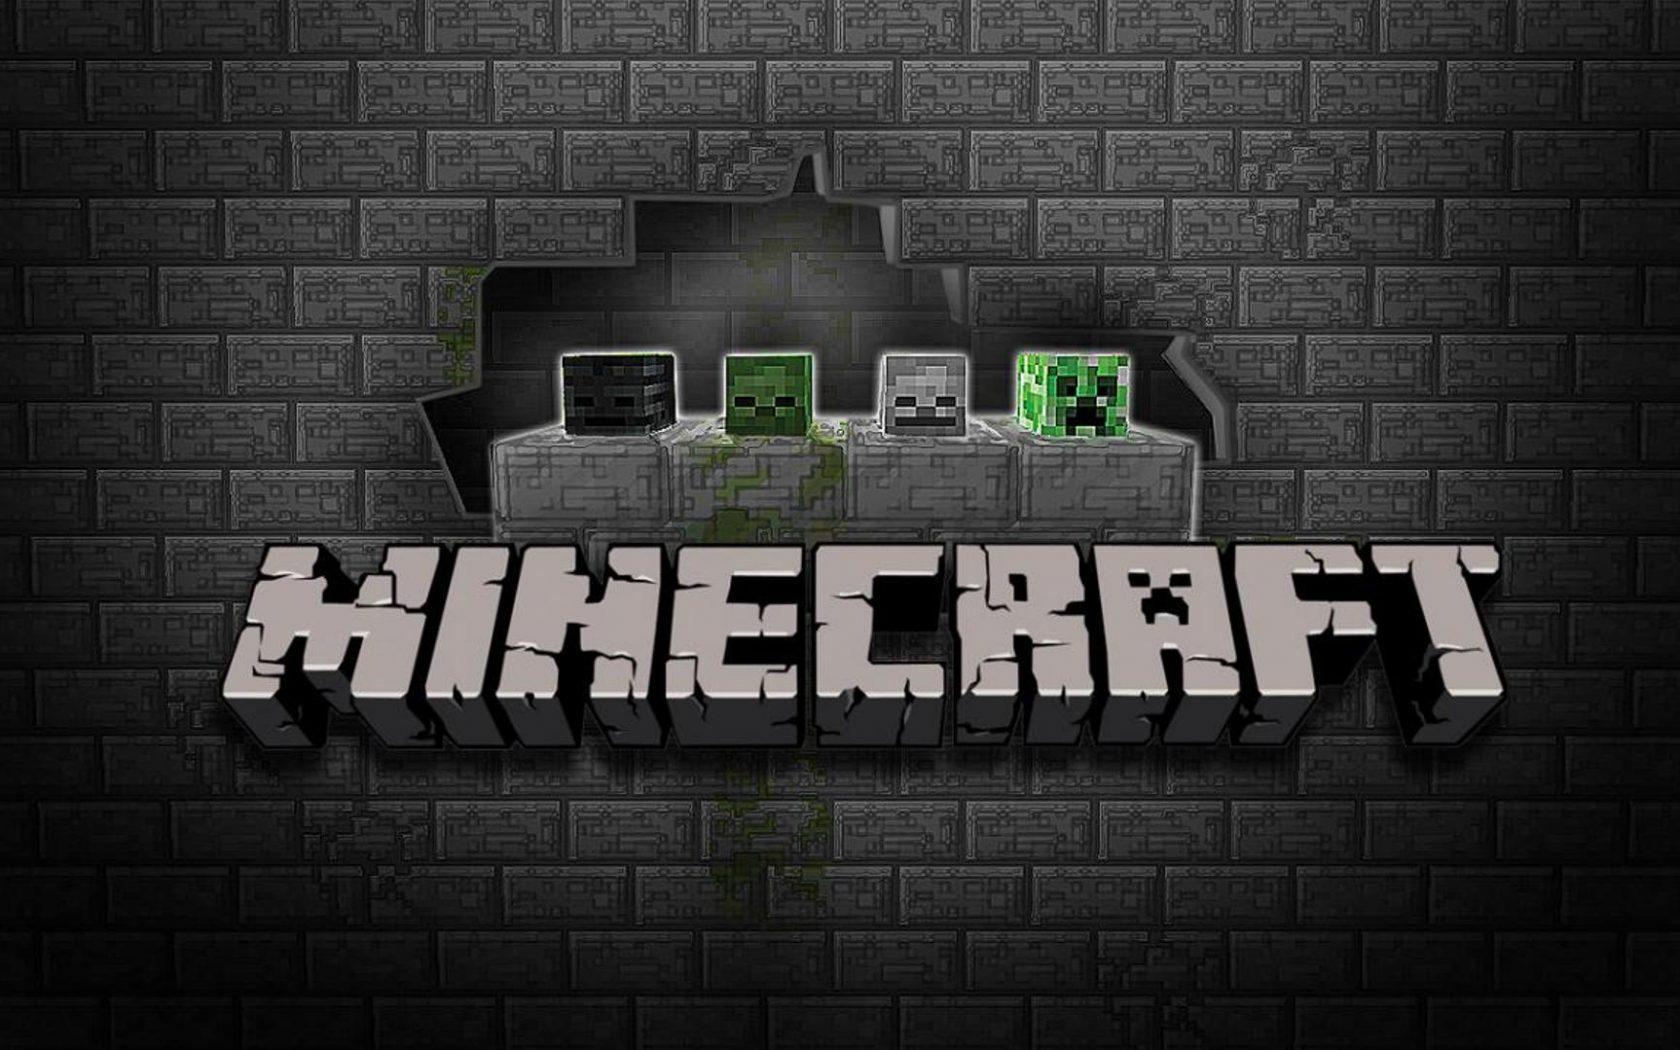 Cool Minecraft Logo - Cool Minecraft Game Logo Wallpaper/Background Image | PaperPull